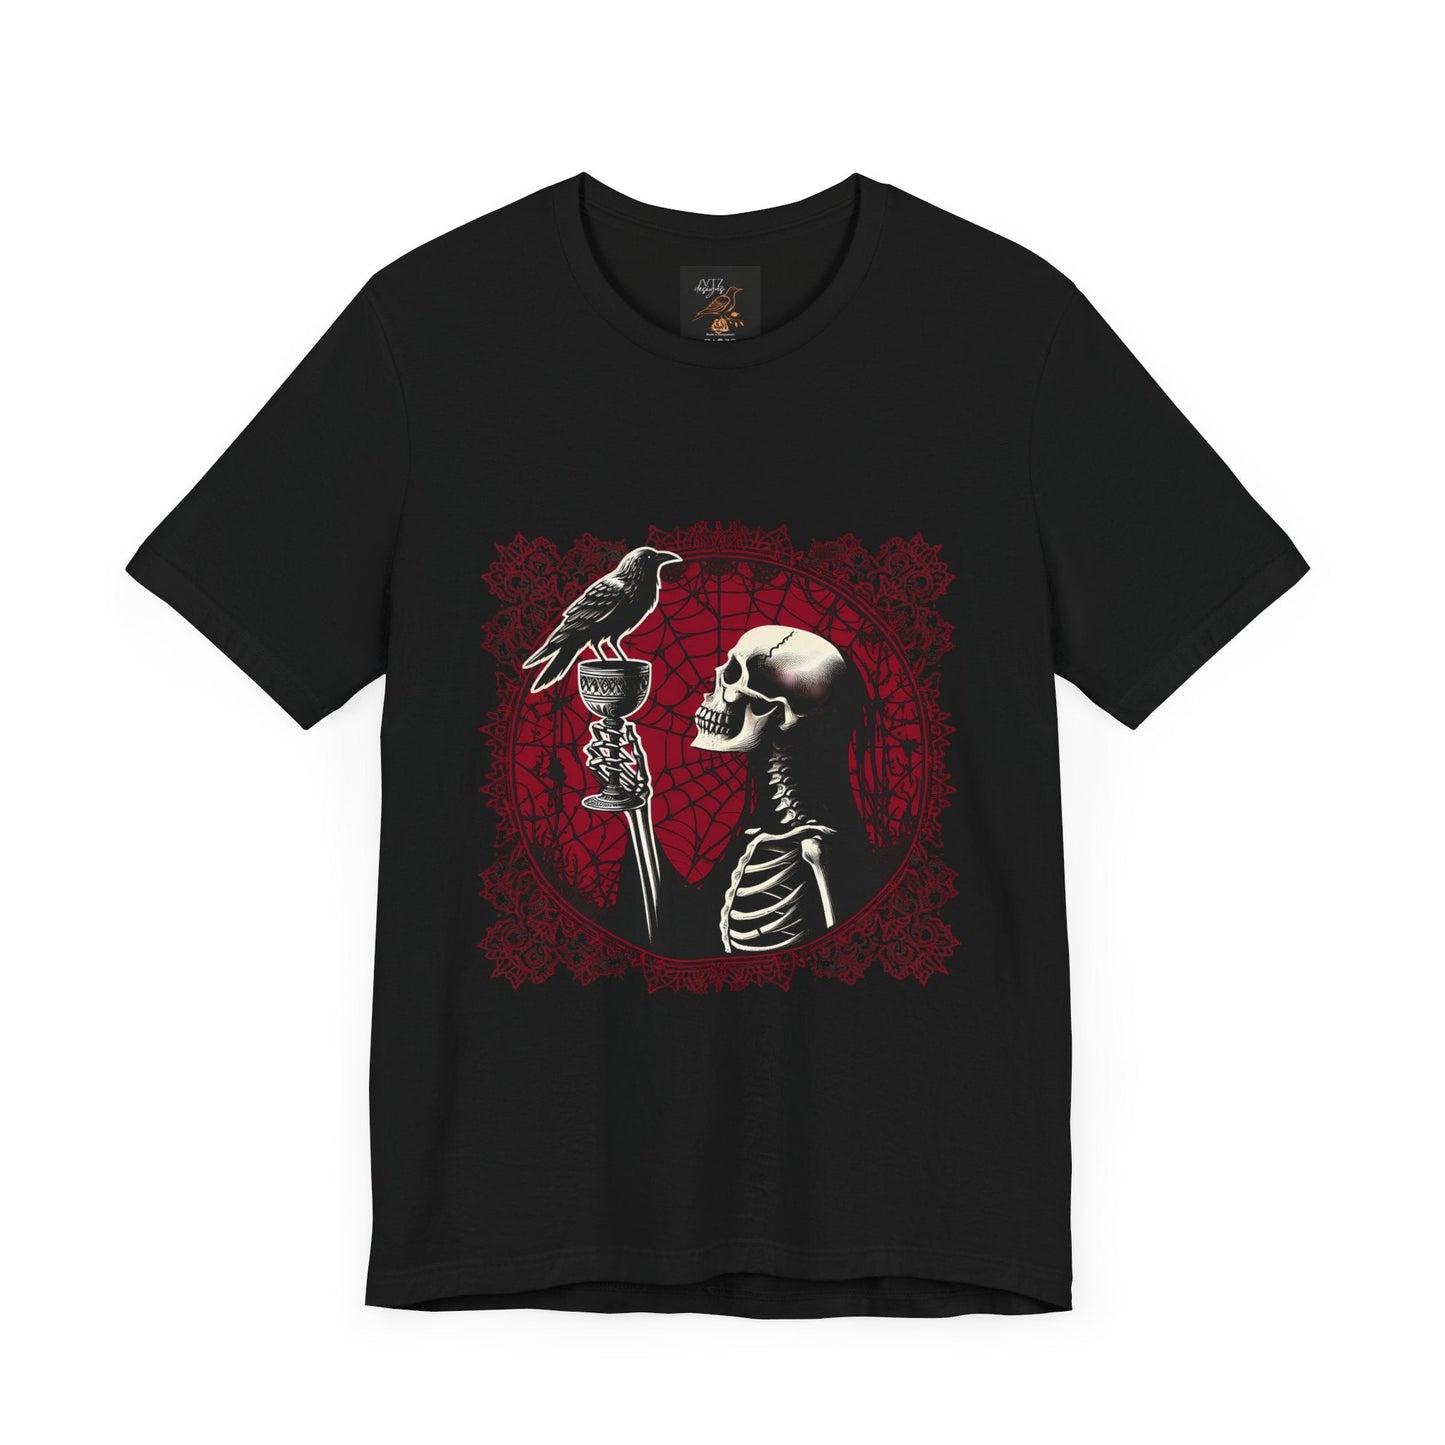 Skeleton Holding Up Goblet With Raven Short Sleeve Tee ShirtT - ShirtVTZdesignsBlackXSbaroqueclothesclothing